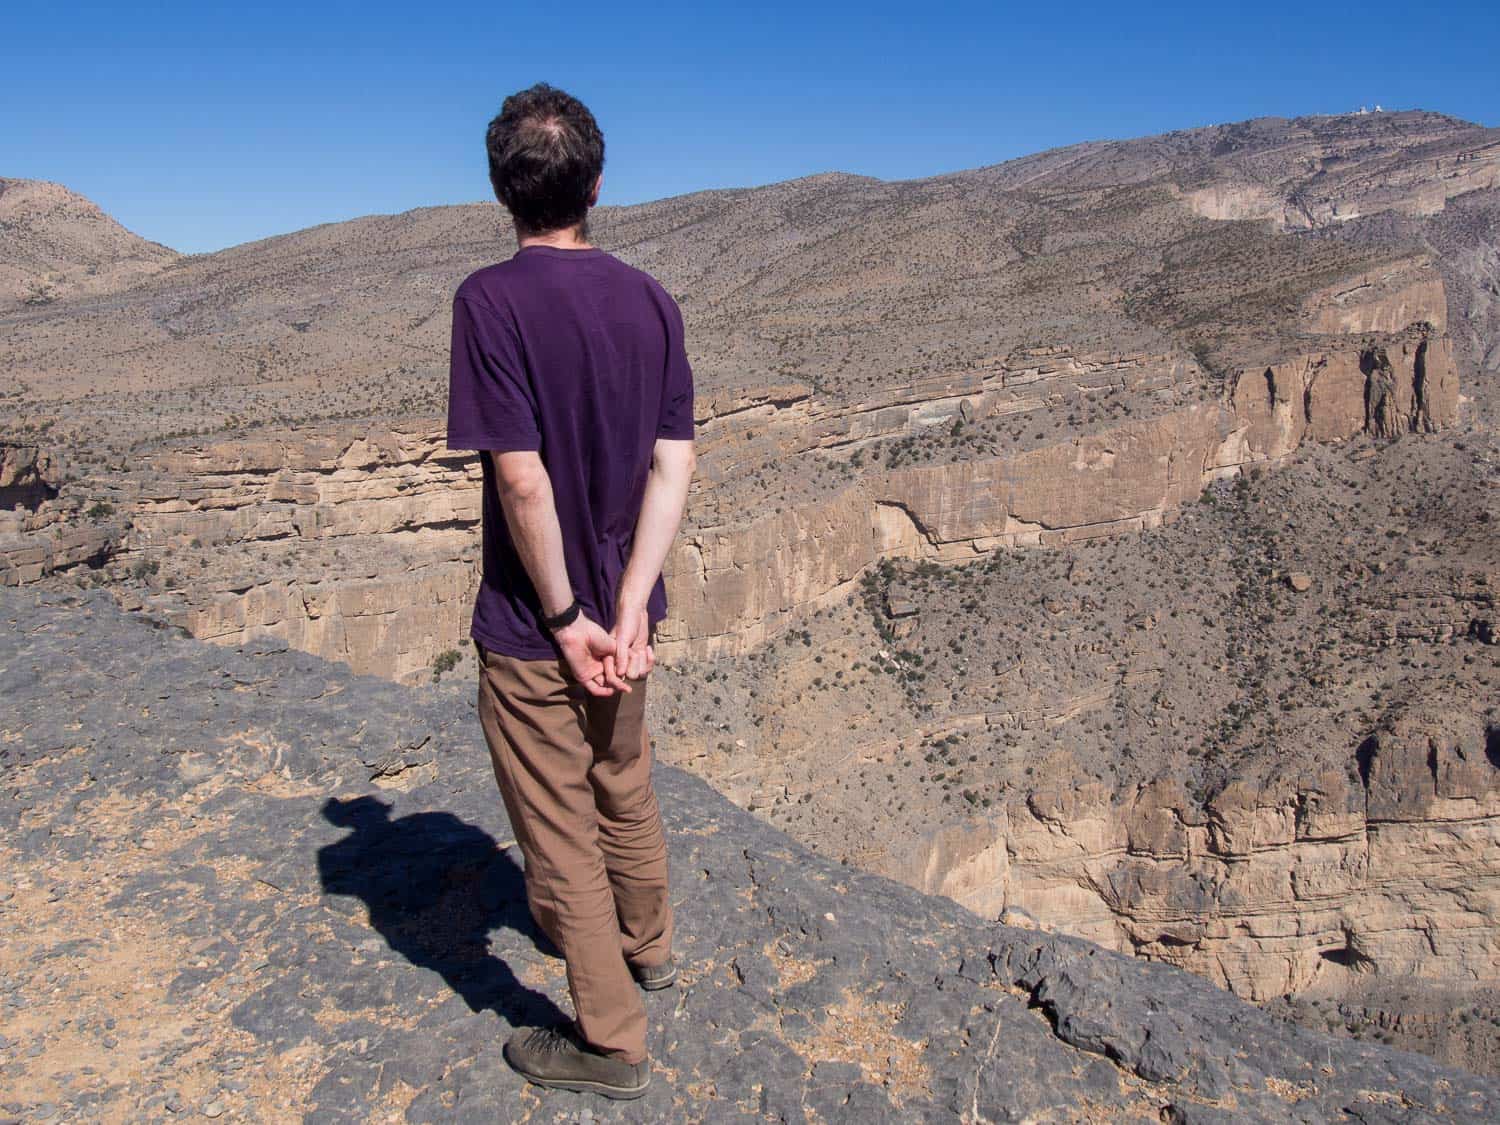 Simon in Bluffworks pants while hiking in Oman